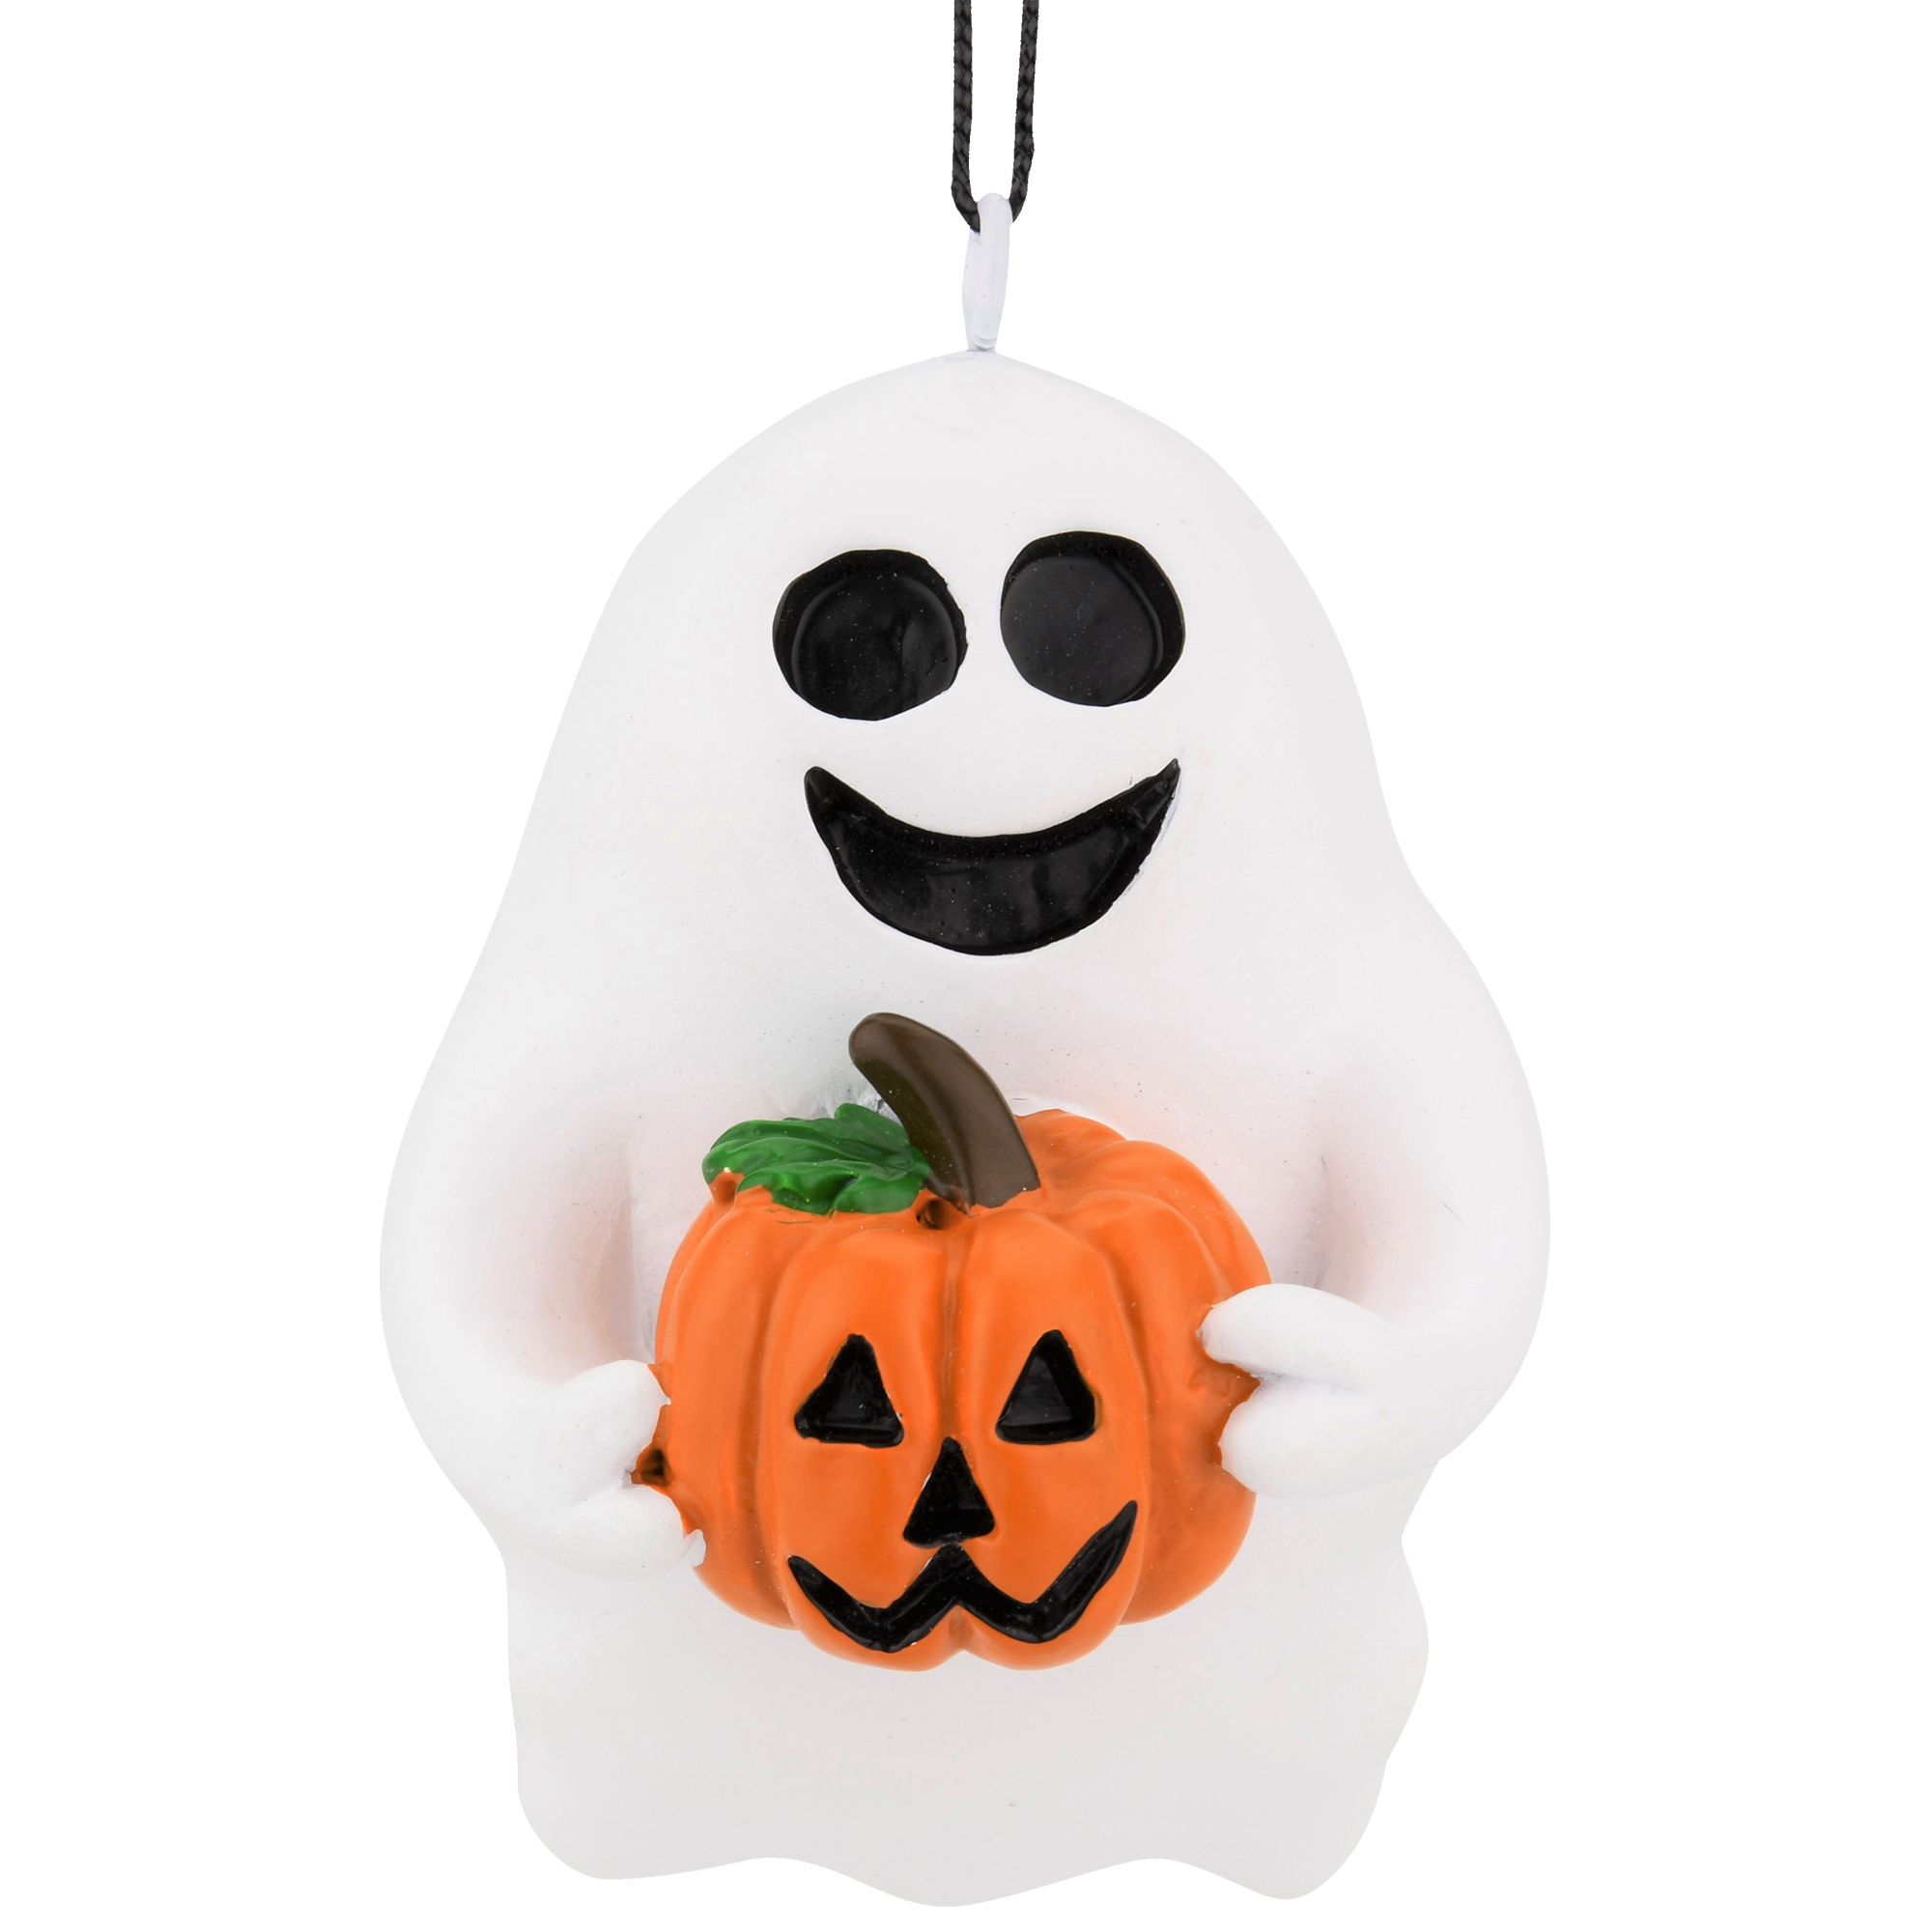 Cute Friendly Ghost with Pumpkin Halloween Ornament| Tree Buddees